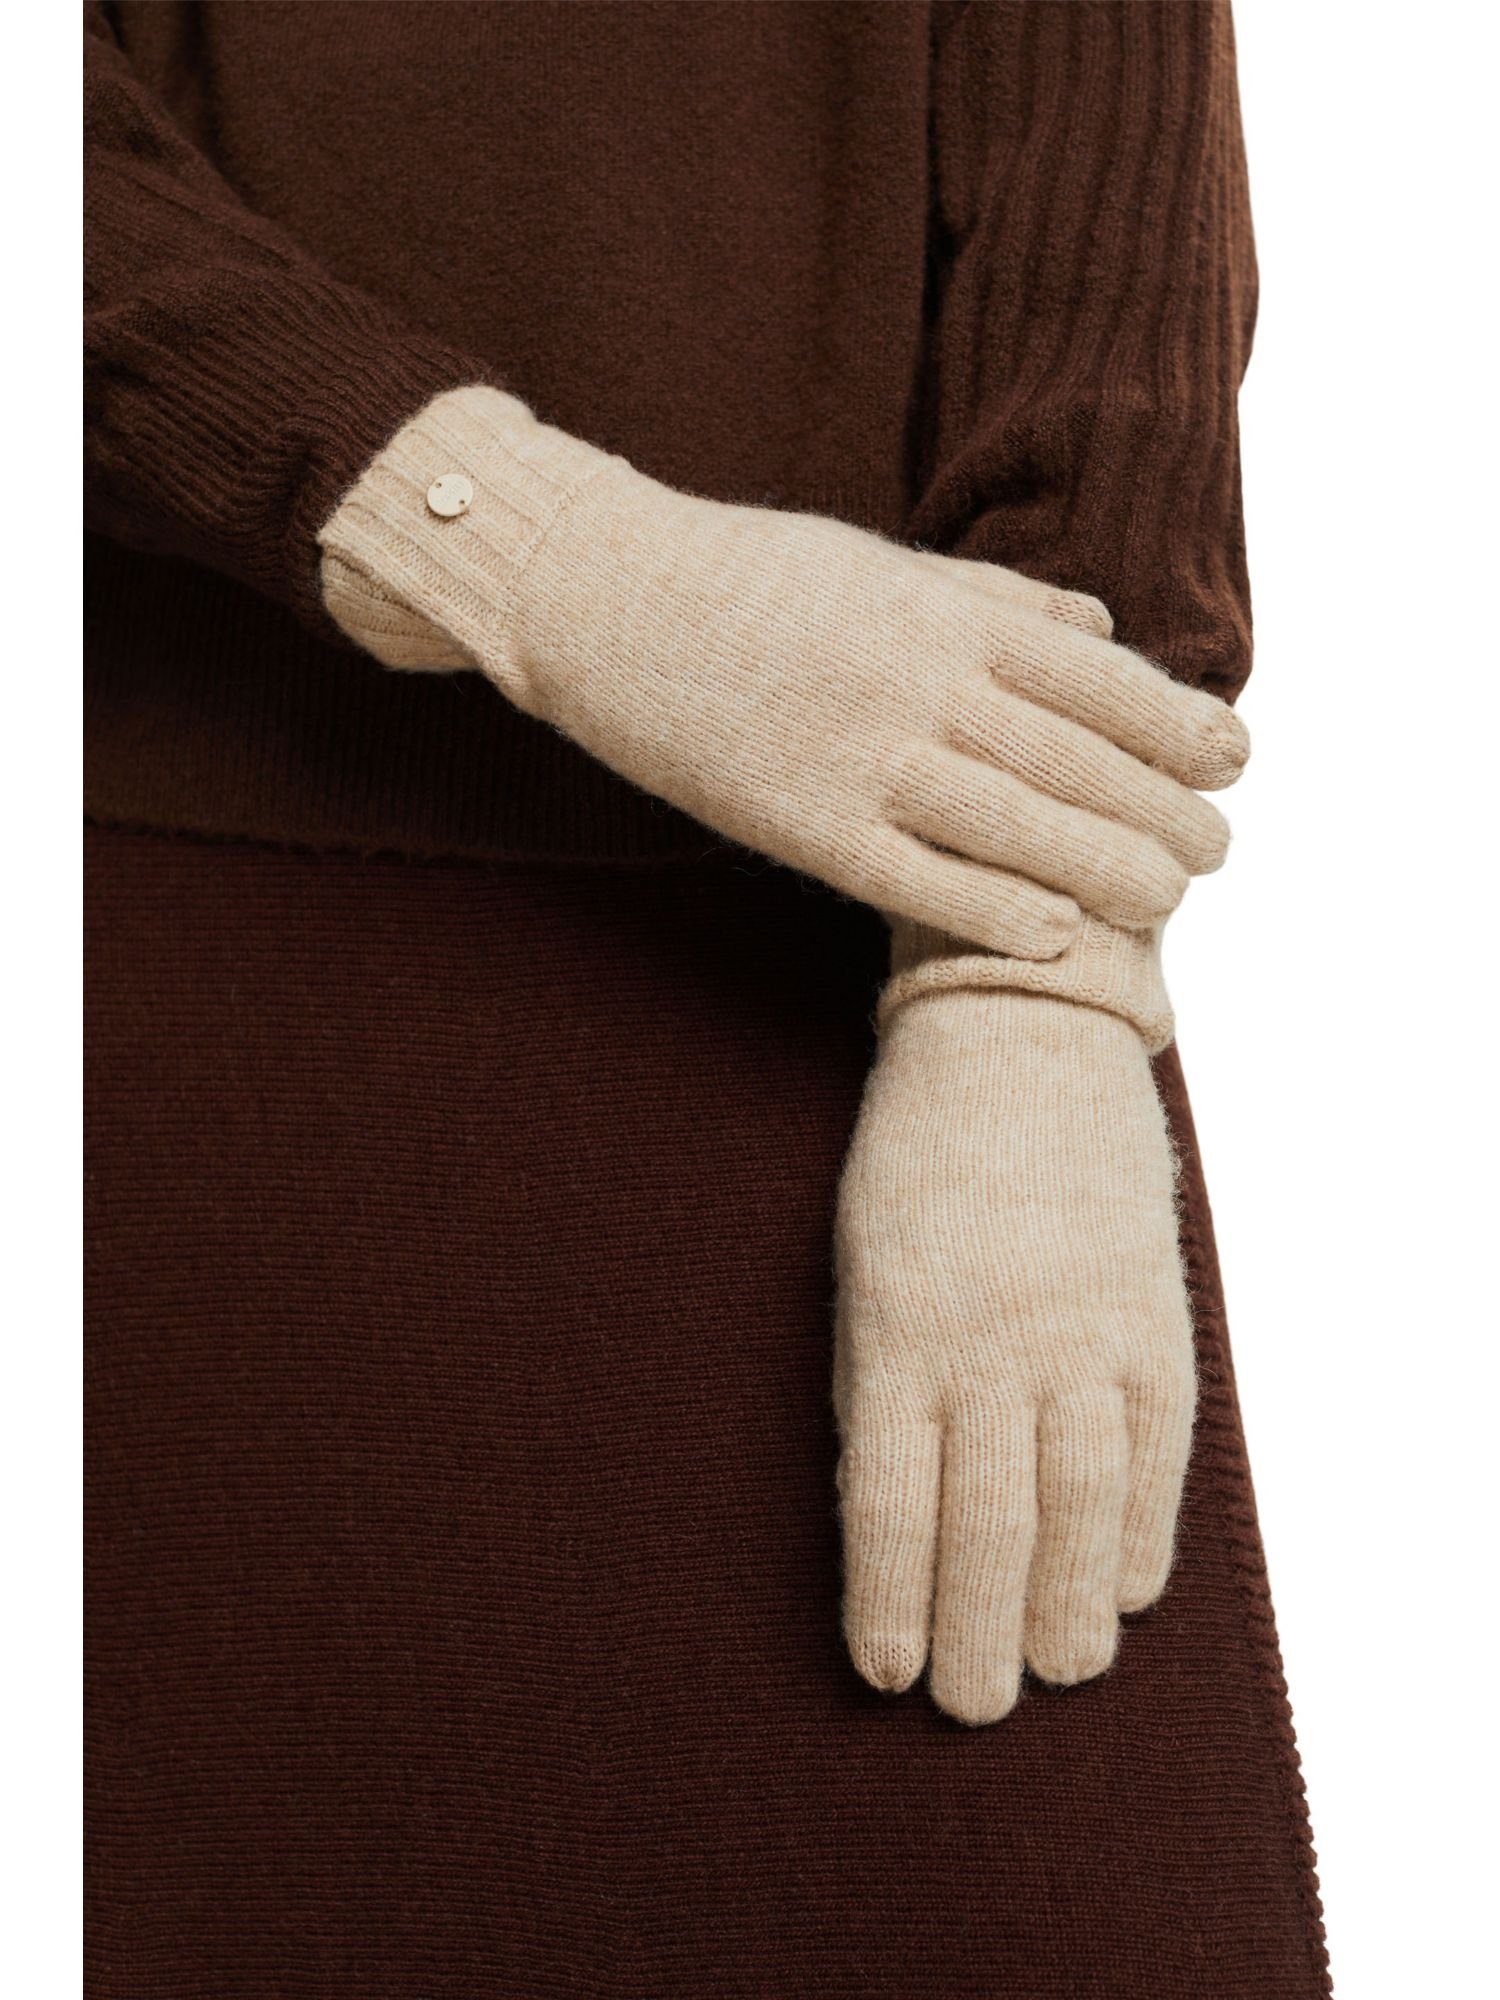 Esprit Strickhandschuhe BEIGE Rippstrick-Handschuhe